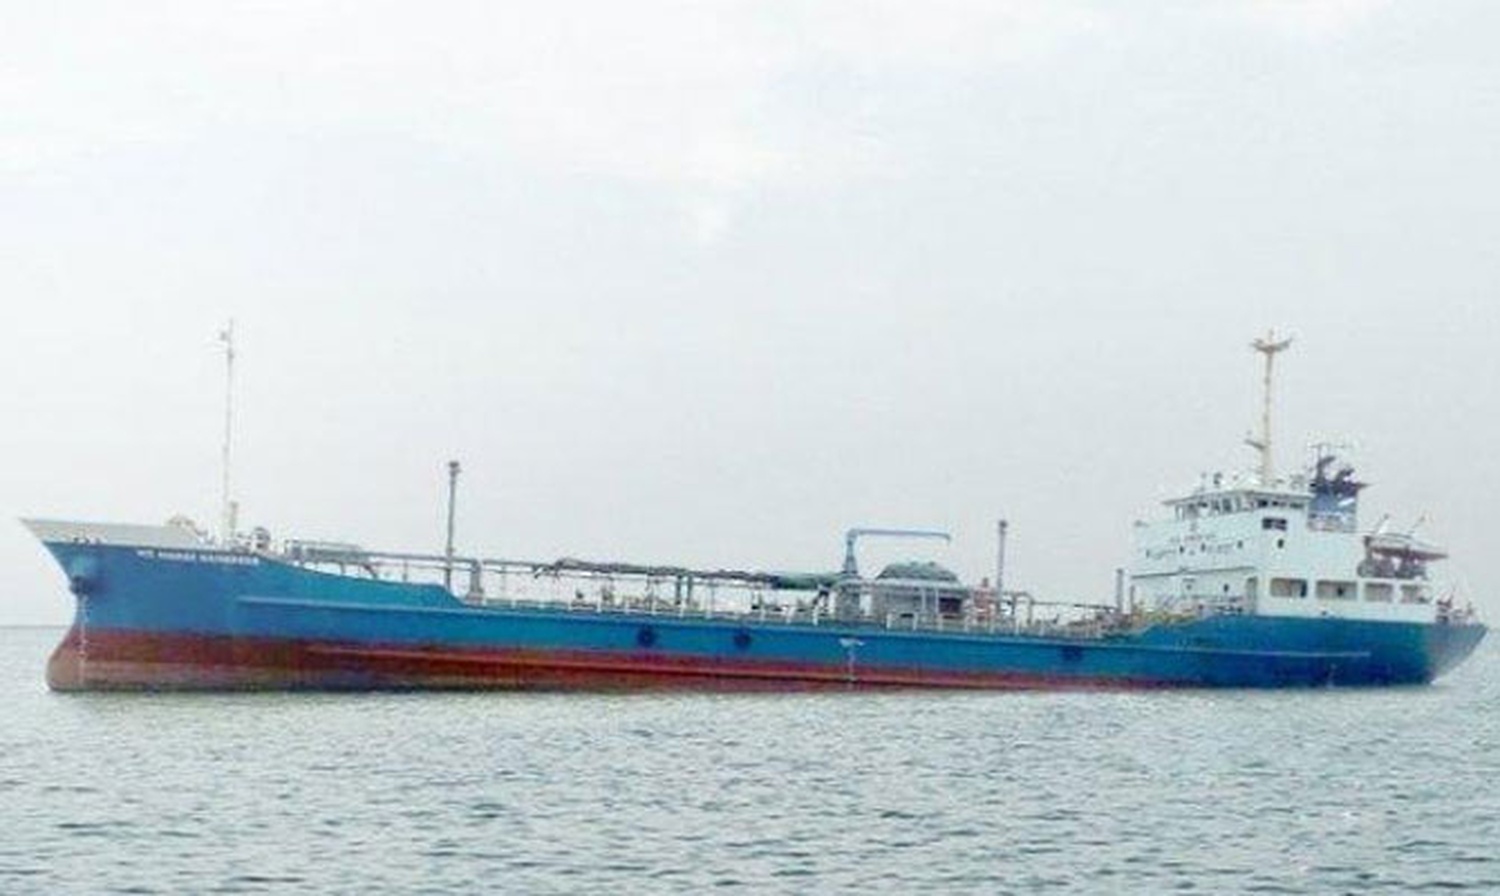 Palm oil tanker